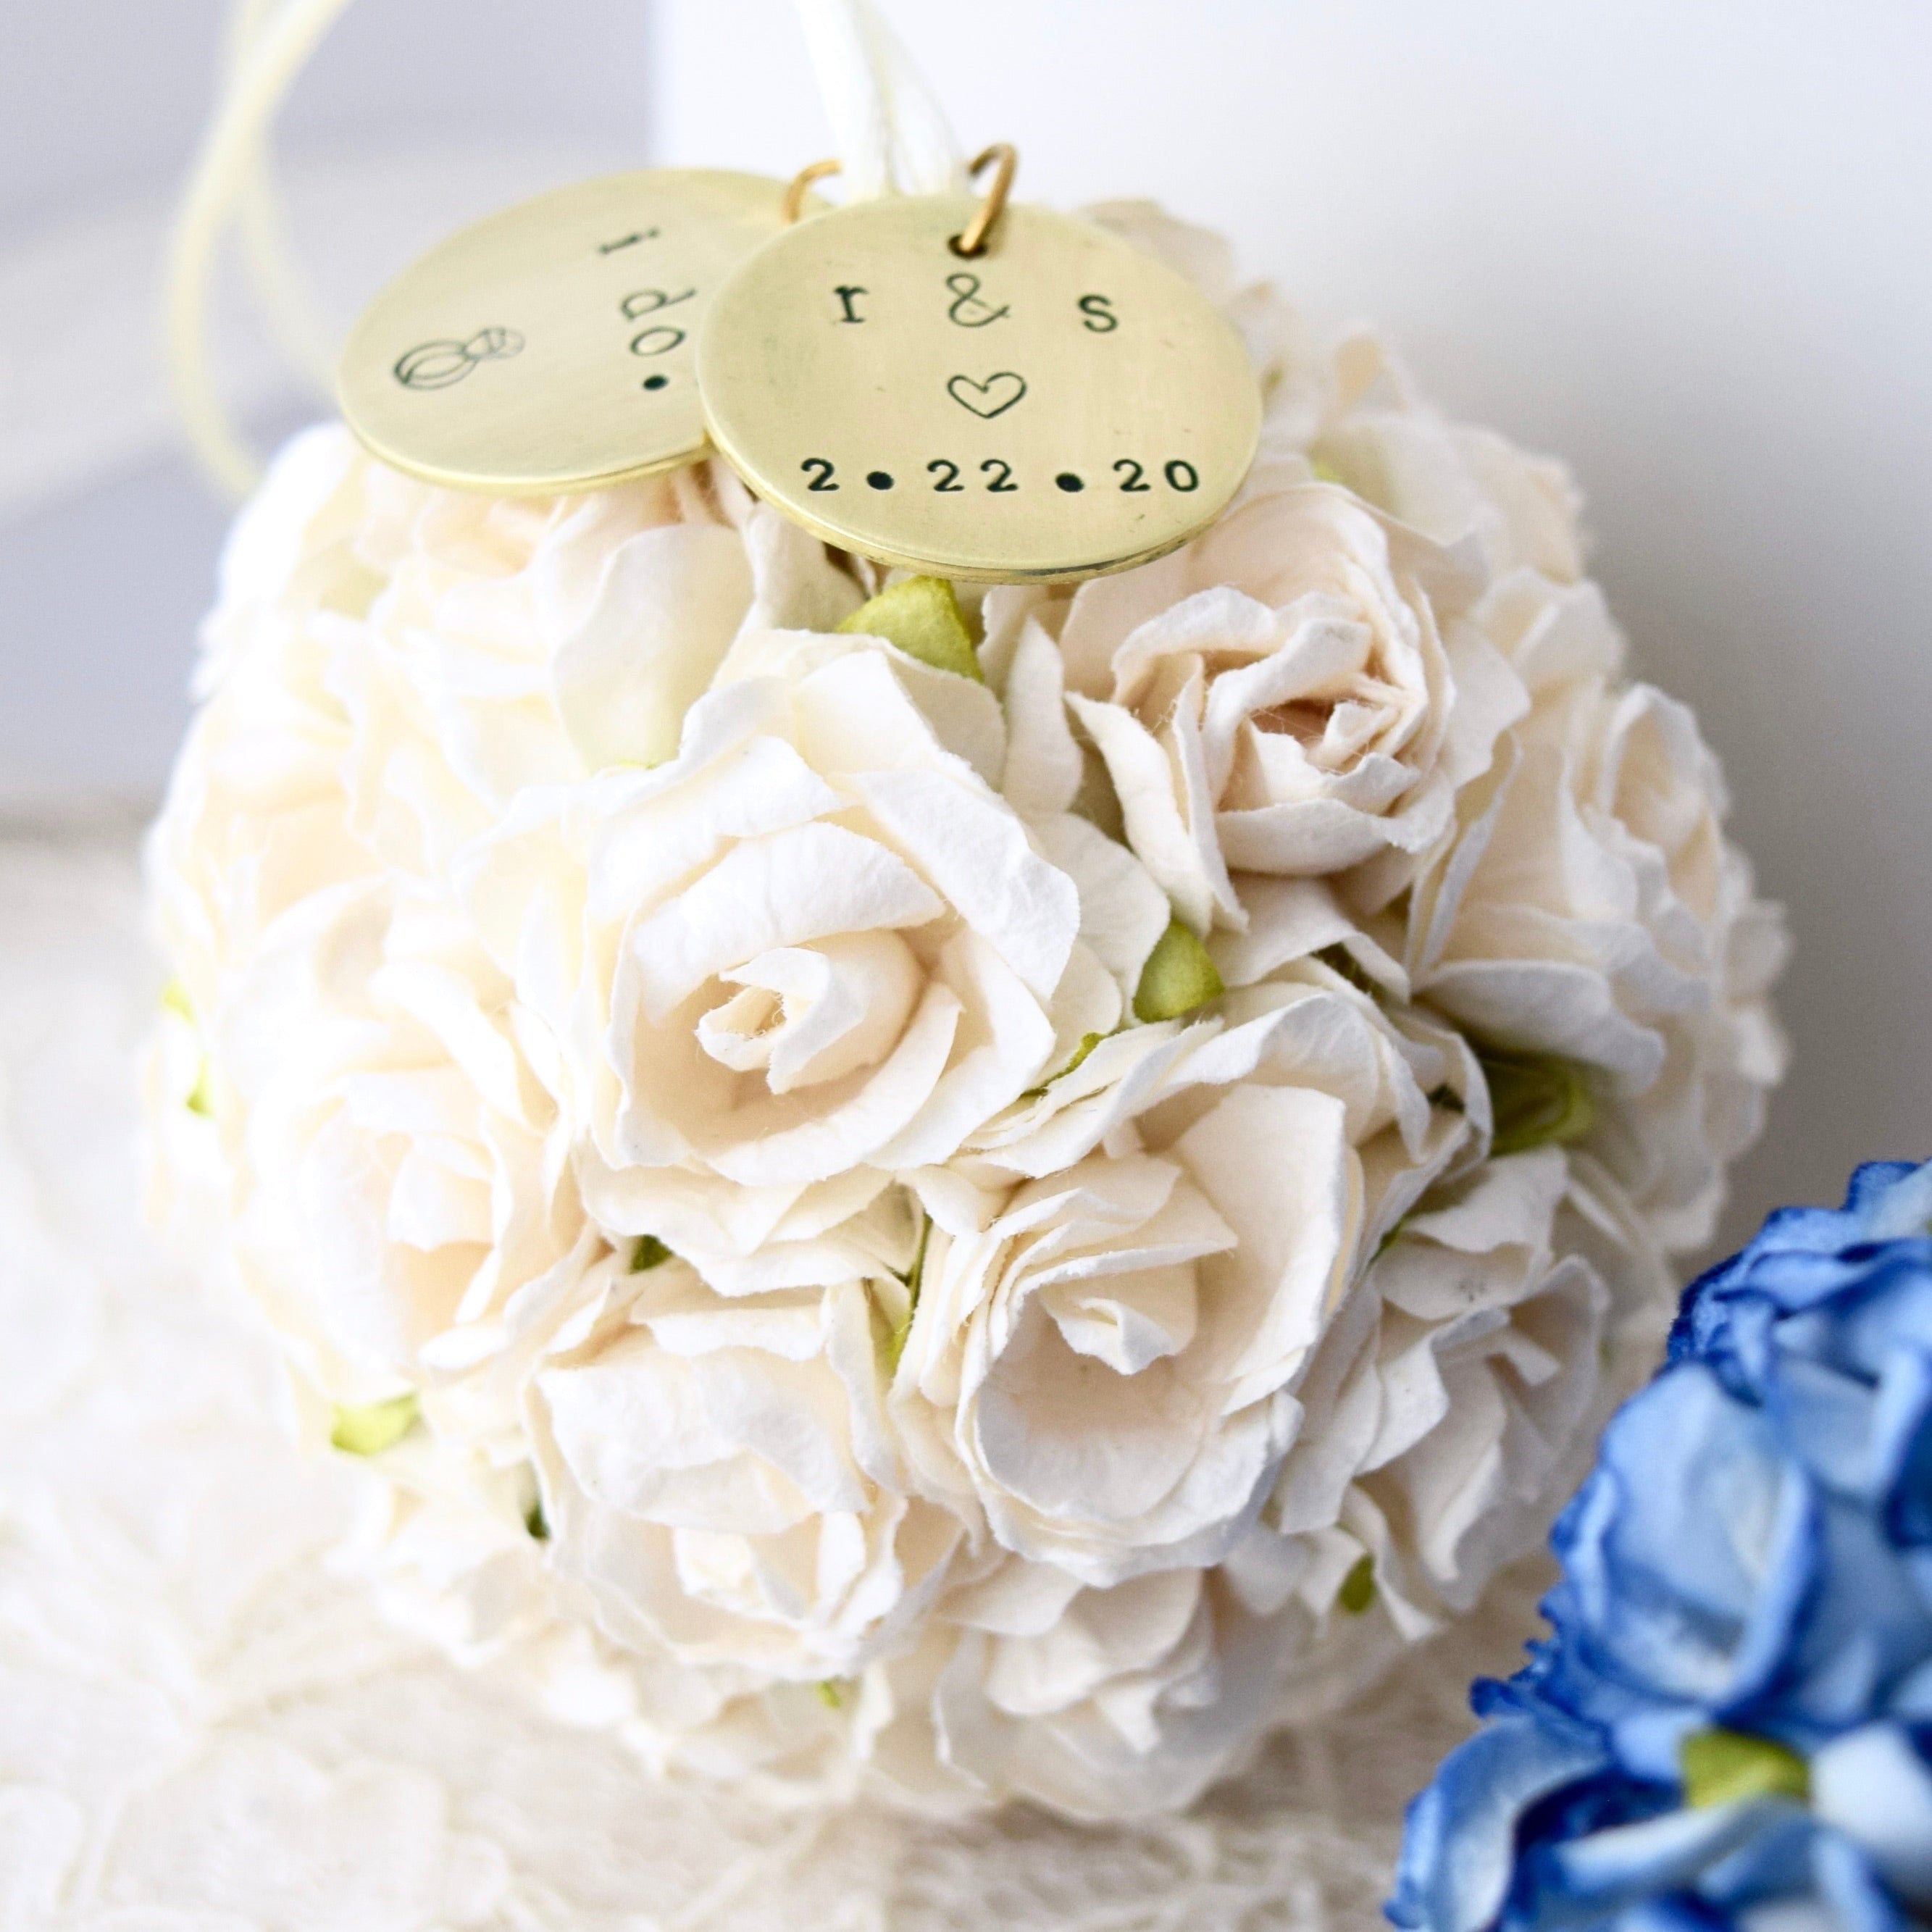 Wedding Bouquet Online | Flower Arrangement For Wedding - FNP